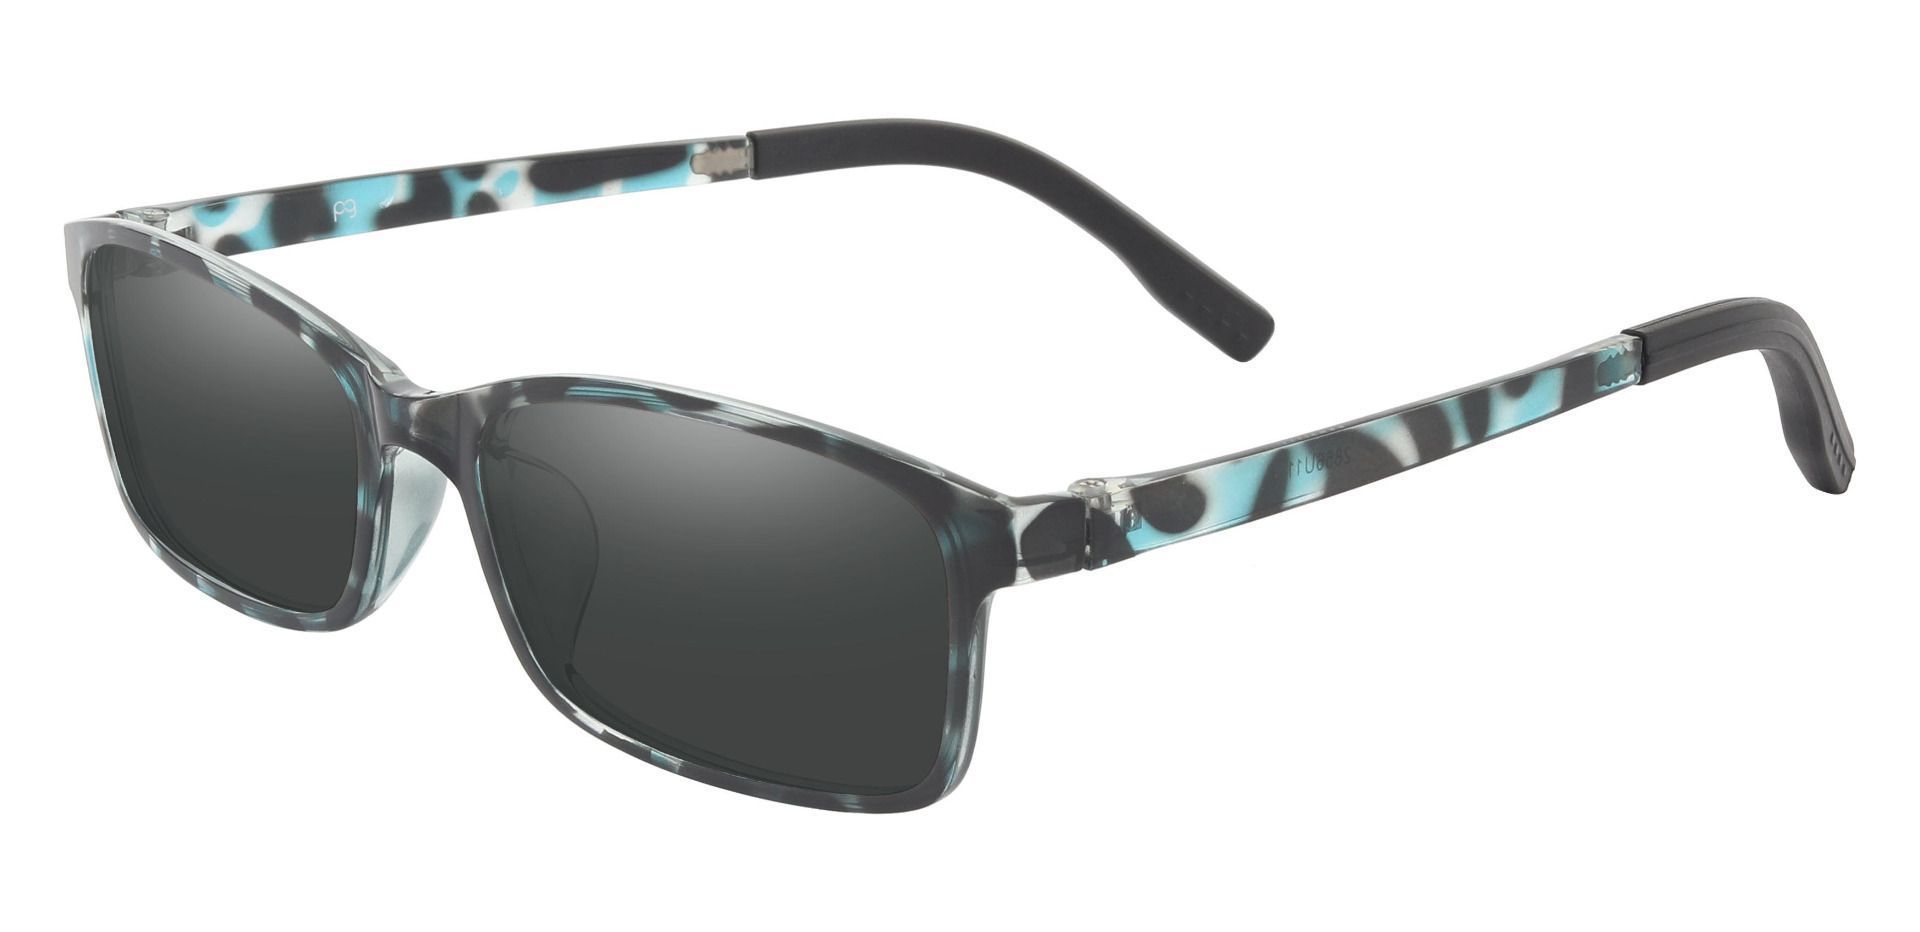 Inman Rectangle Prescription Sunglasses - Multi Color Frame With Gray Lenses